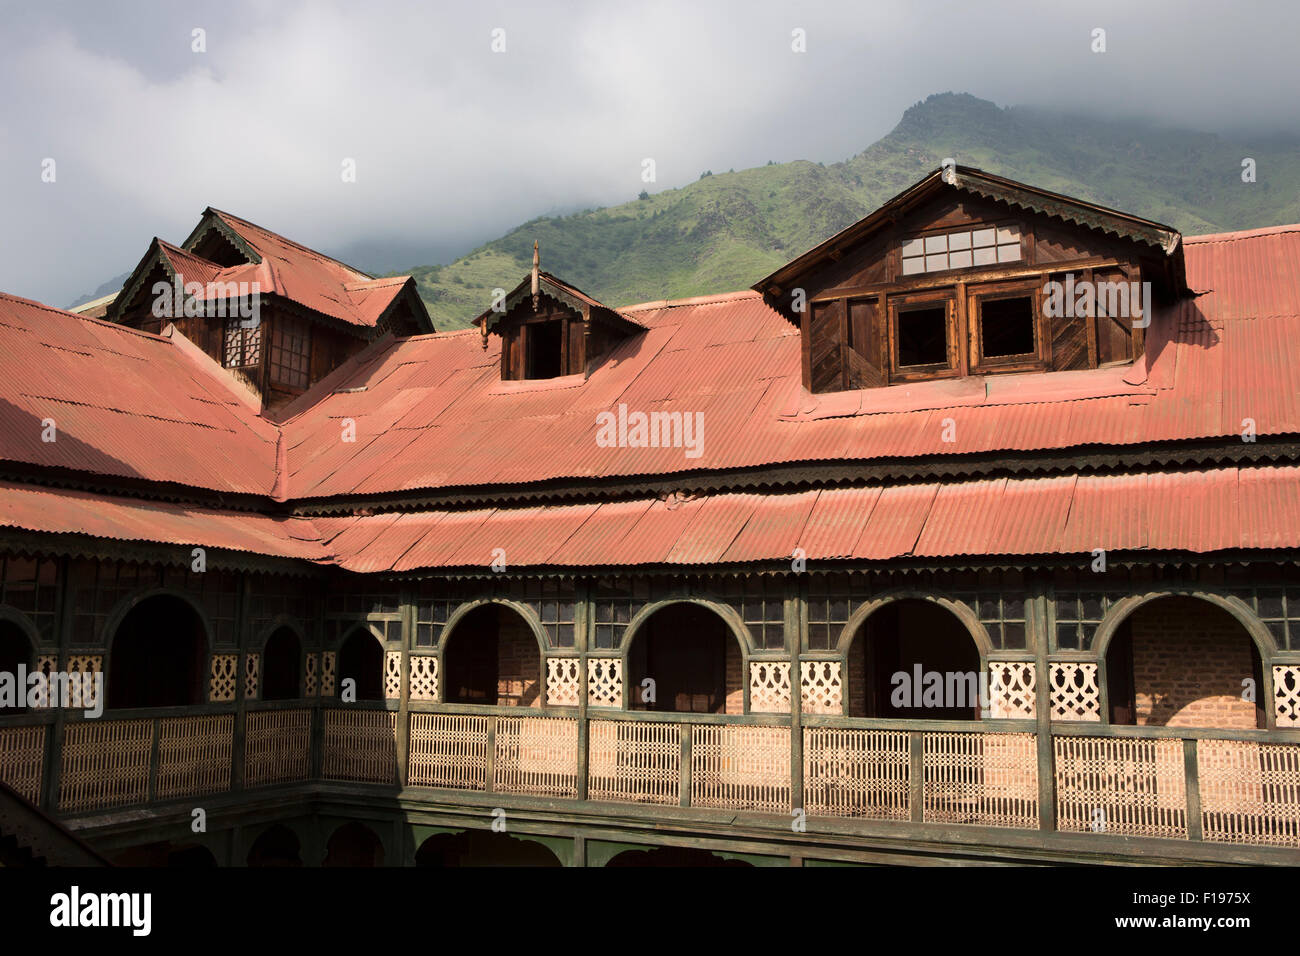 India, Jammu & Kashmir, Srinagar, Khwaja Manzil Nishati house, 1930s heritage home, with Zabarwan mountains Stock Photo